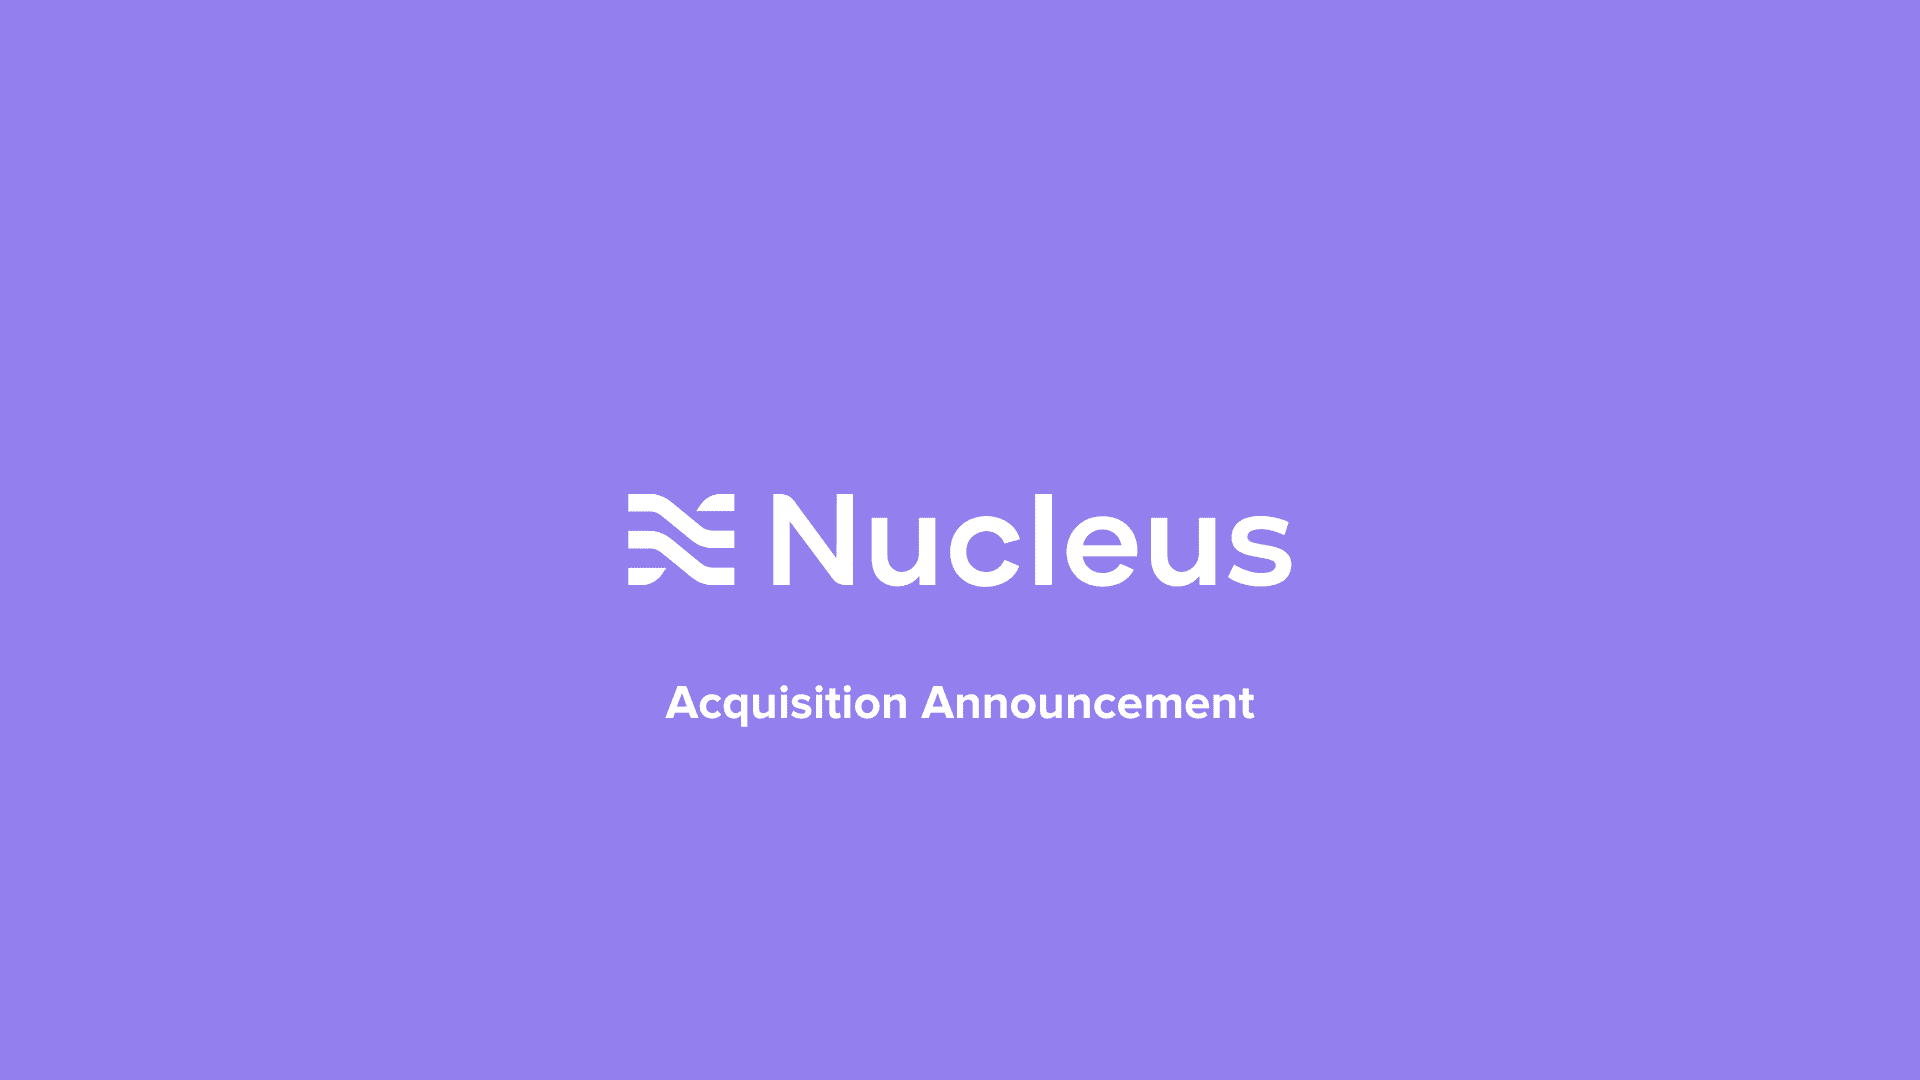 Nucleus Healthcare logo and acquisition announcement